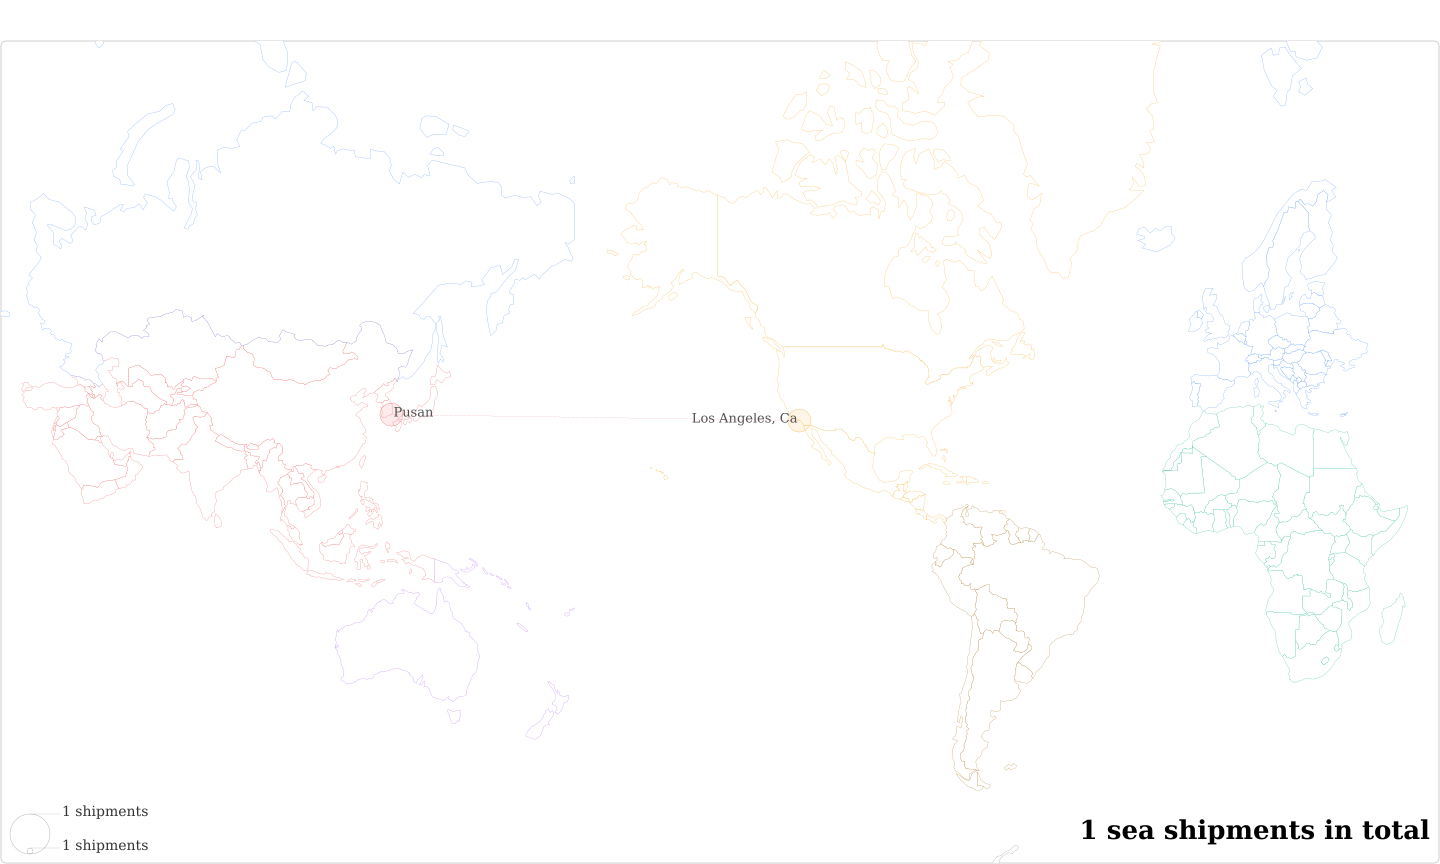 Abc Restaurant Equipmentco's Imports Per Country Map